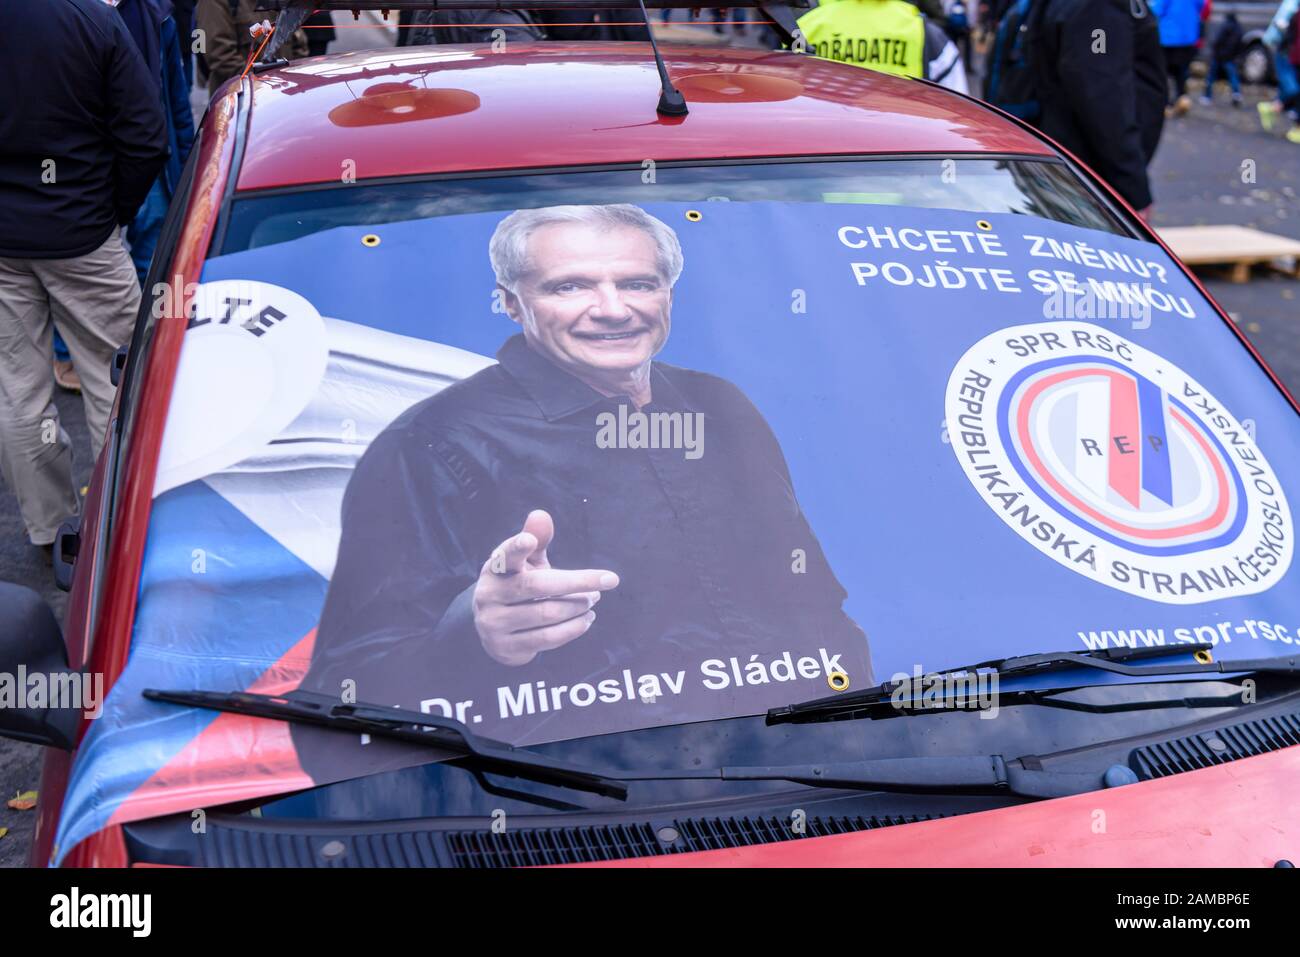 Prague, Czech Republic. 17-Nov-2019.  Banner on a car for Czech politician Miroslav Sládek from the right-wing populist Coalition for Republic – Republican Party of Czechoslovakia (SPR-RSČ). Stock Photo